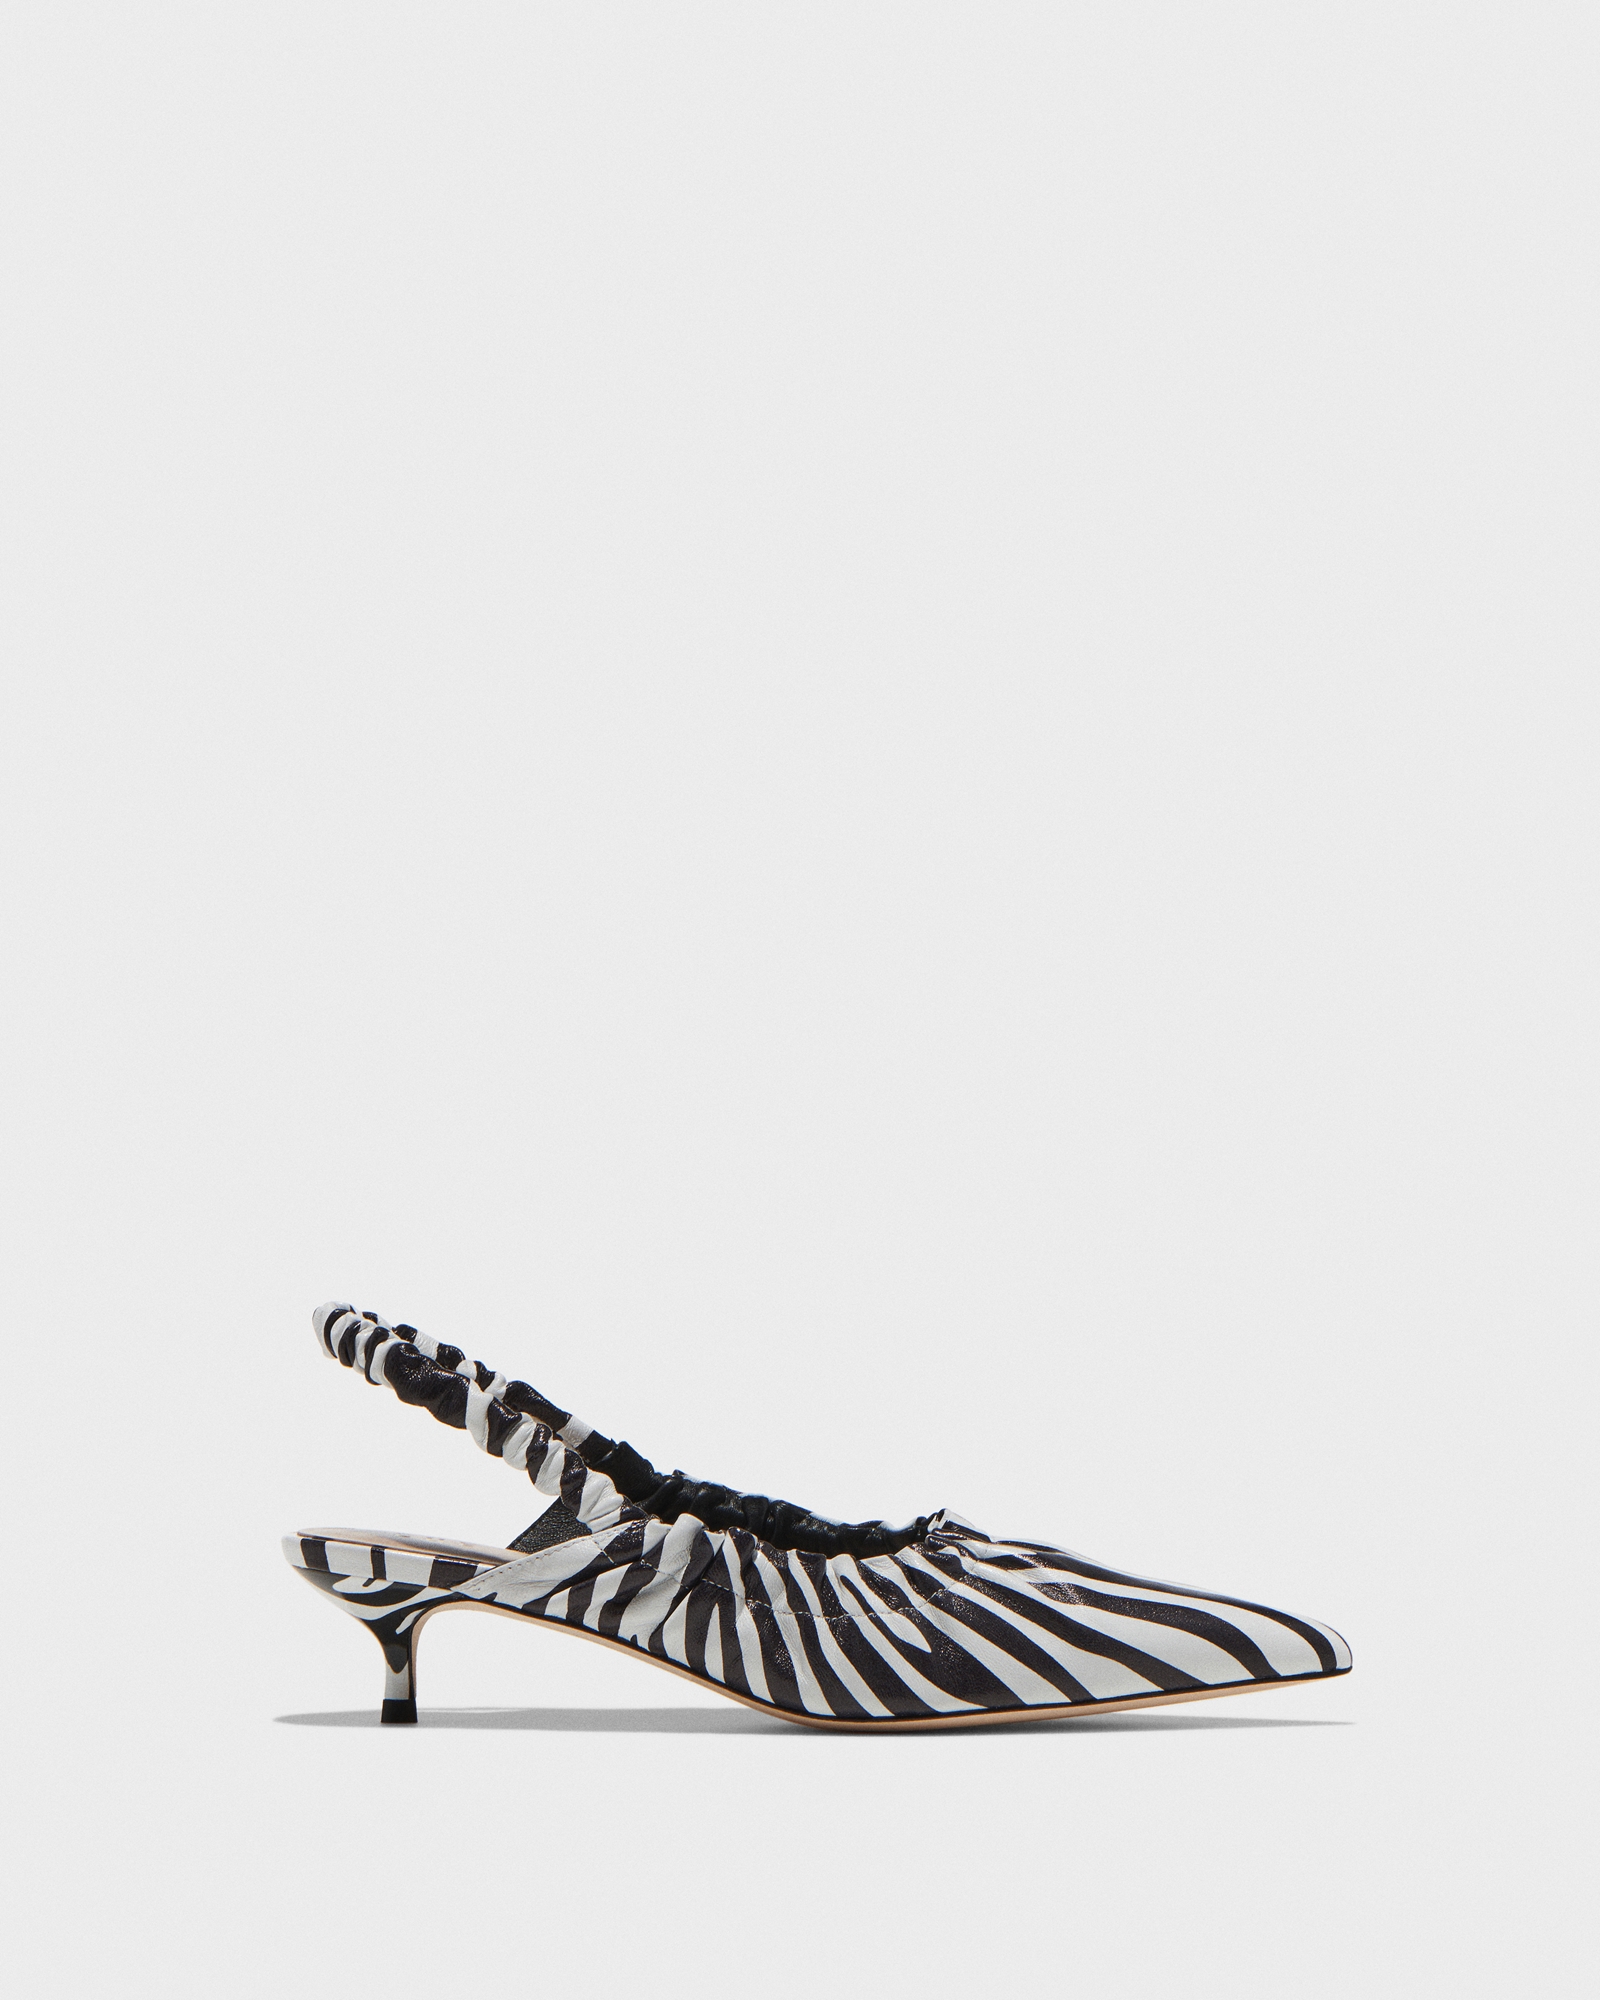 Accessories | Printed Leather Slingback Heel | 988 Black/White